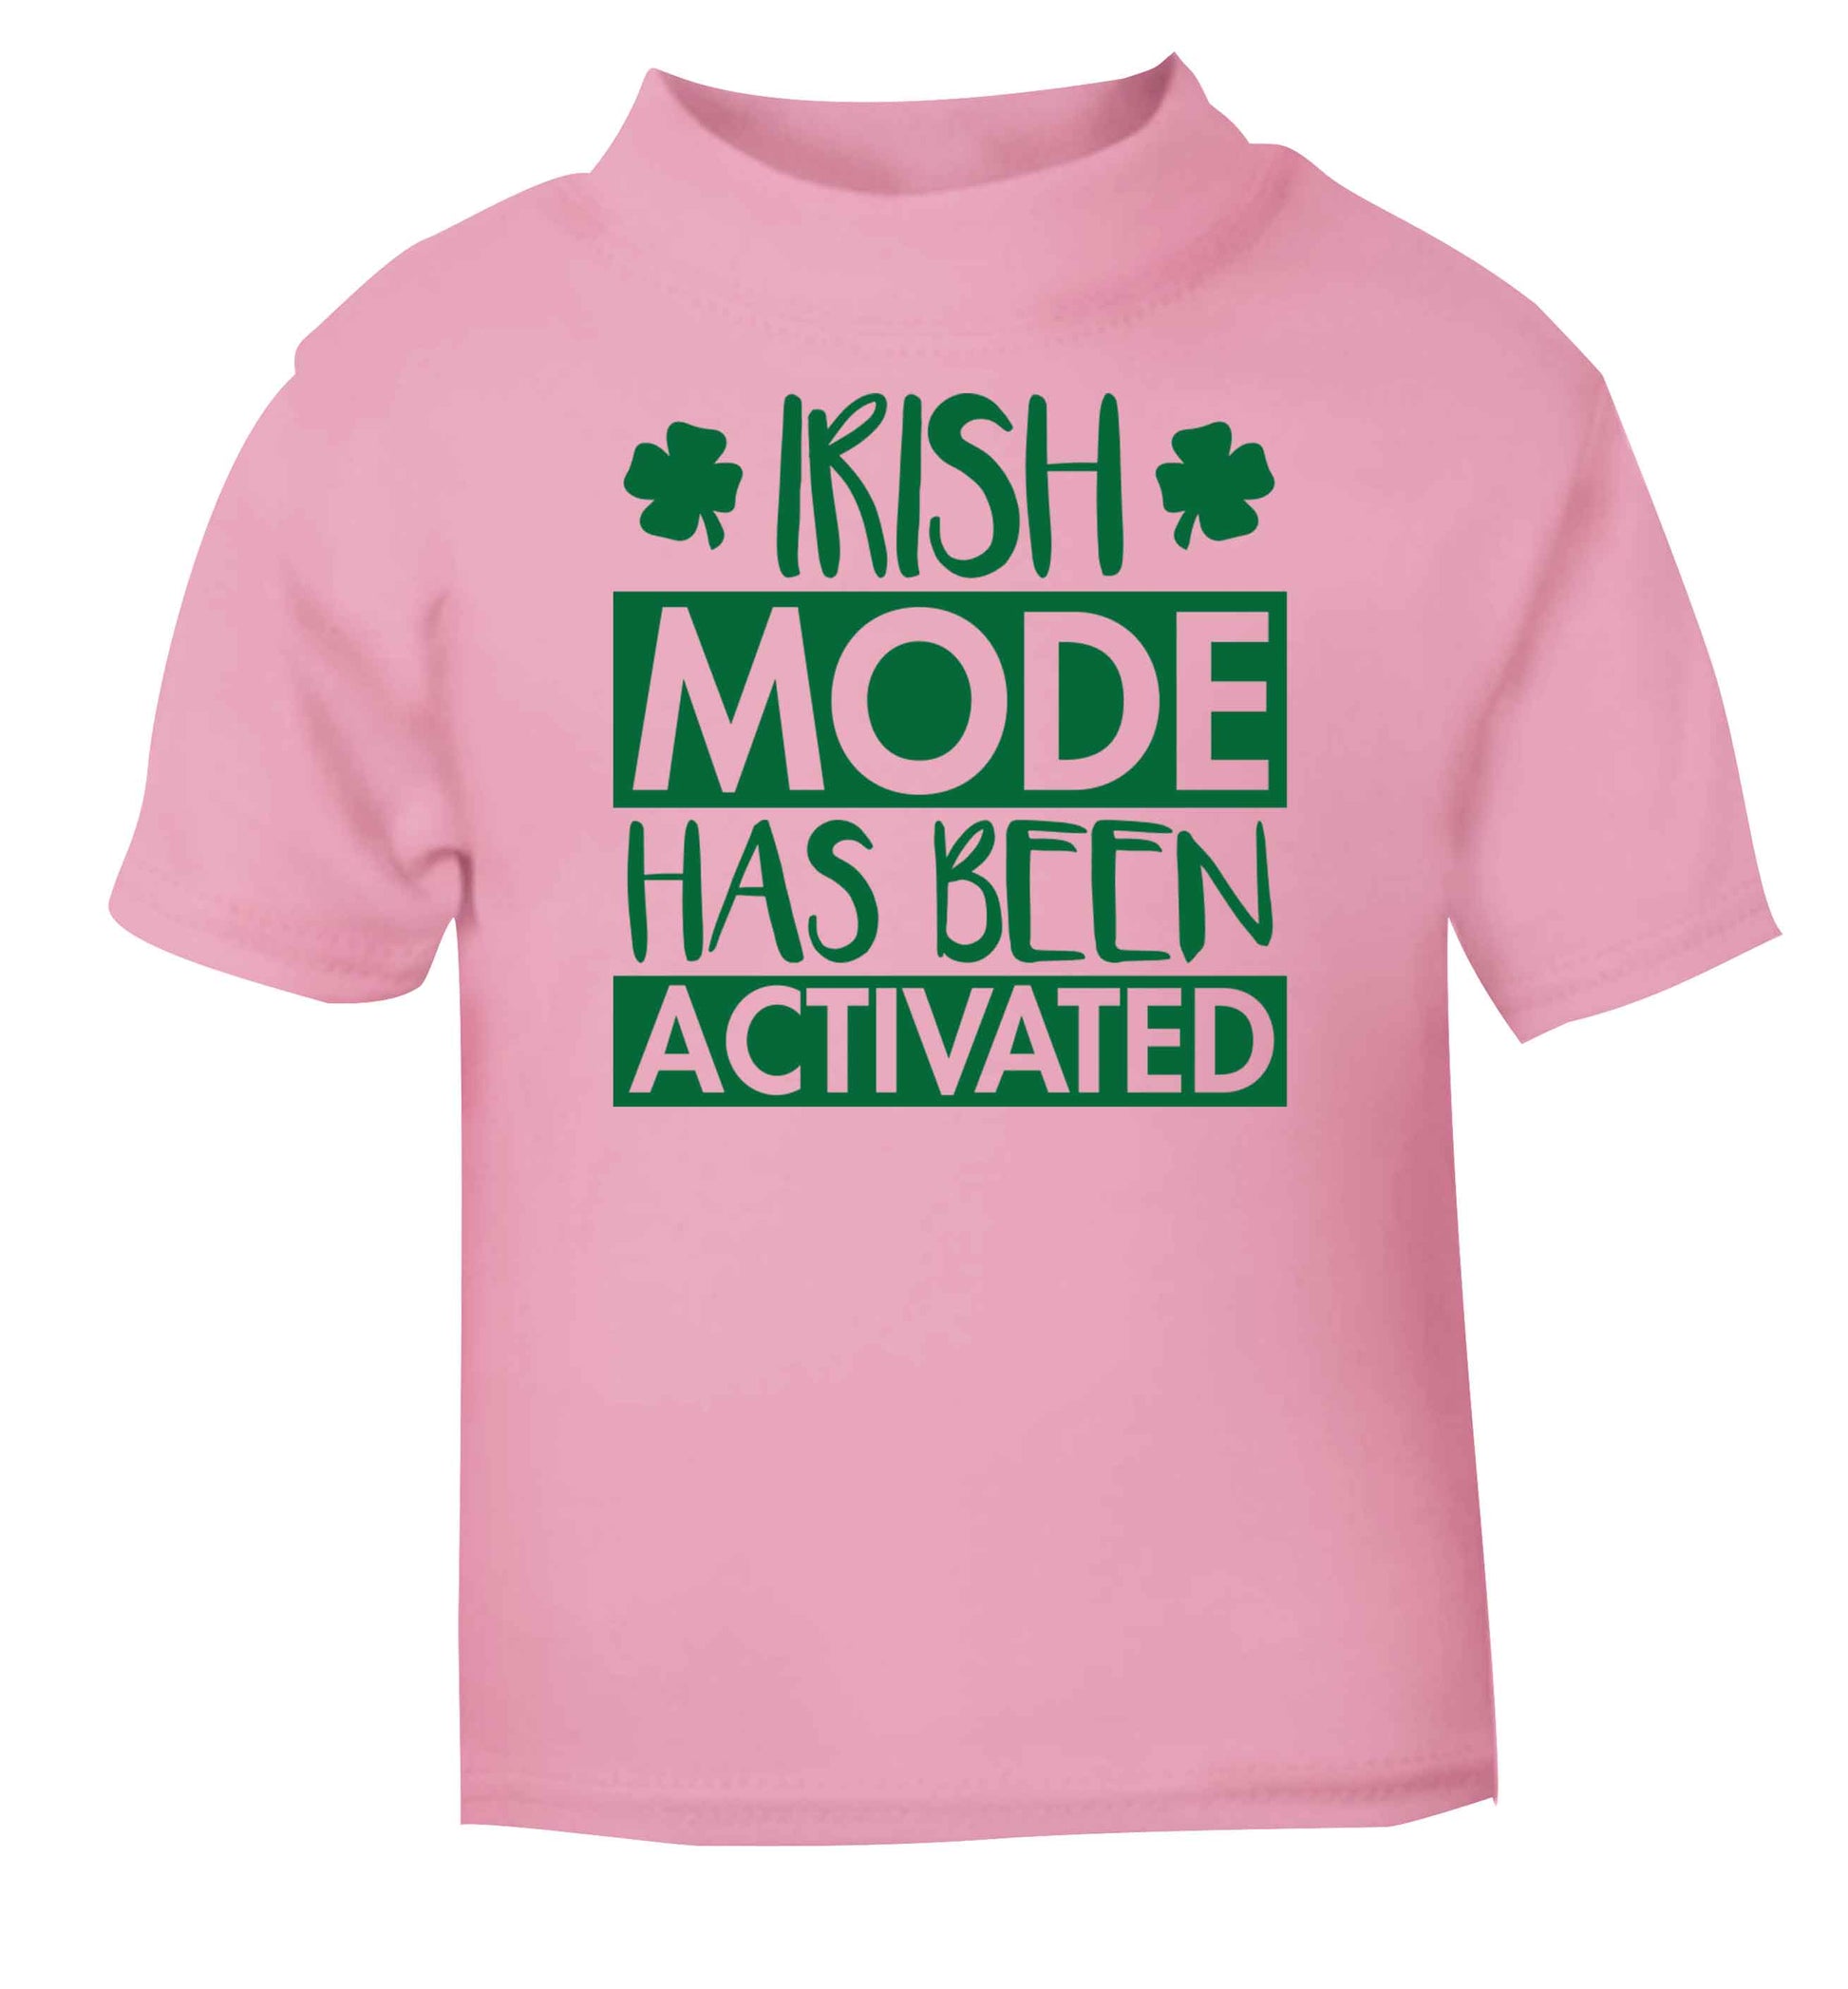 Irish mode has been activated light pink baby toddler Tshirt 2 Years